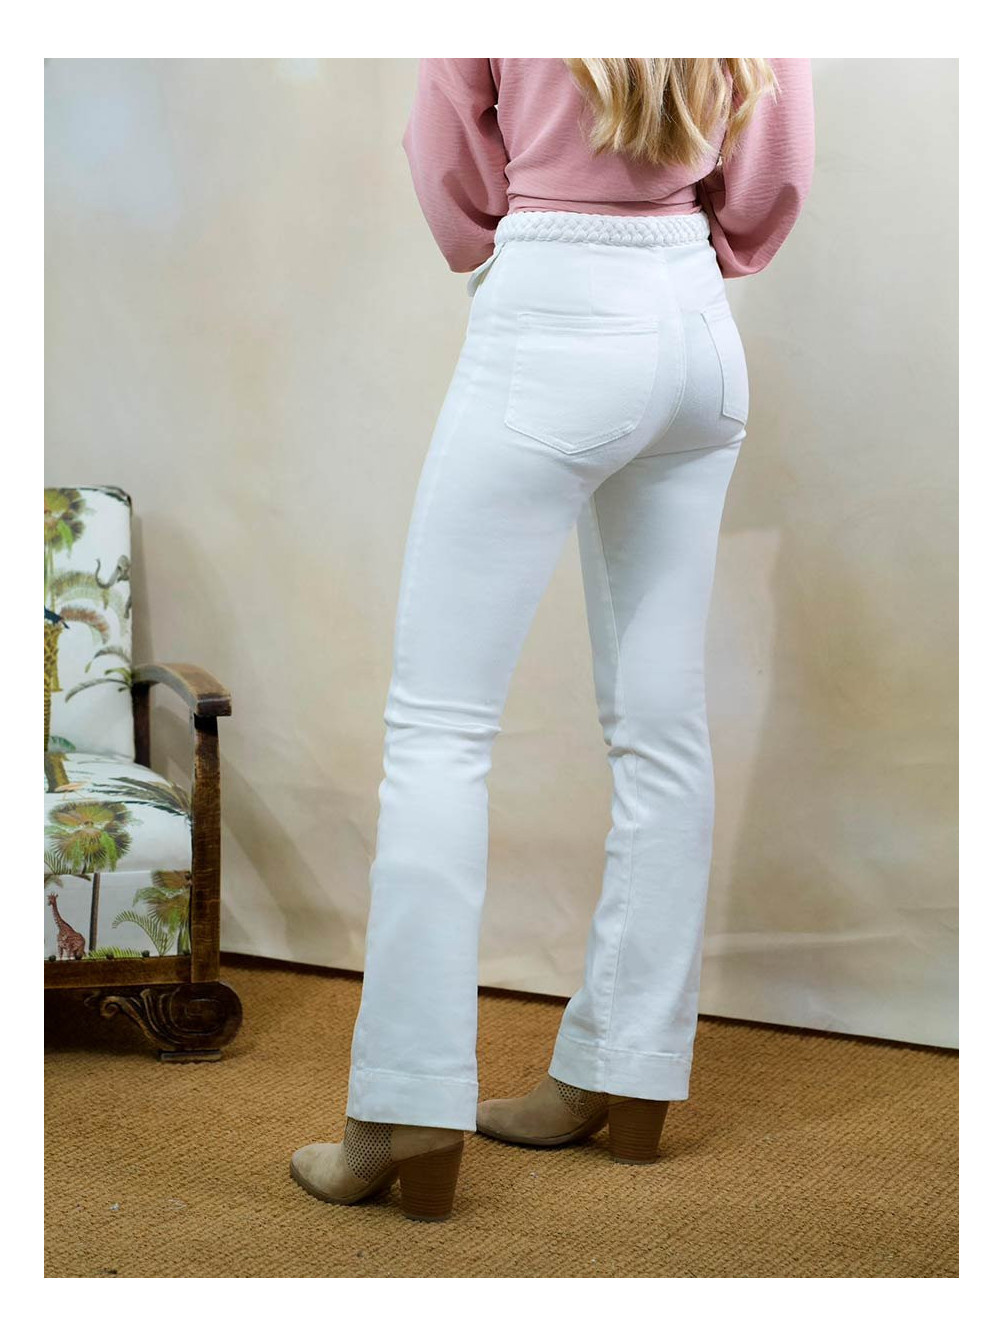 Jeans Trenzada | Jeans Blanco Mujer Mariquita Trasquilá